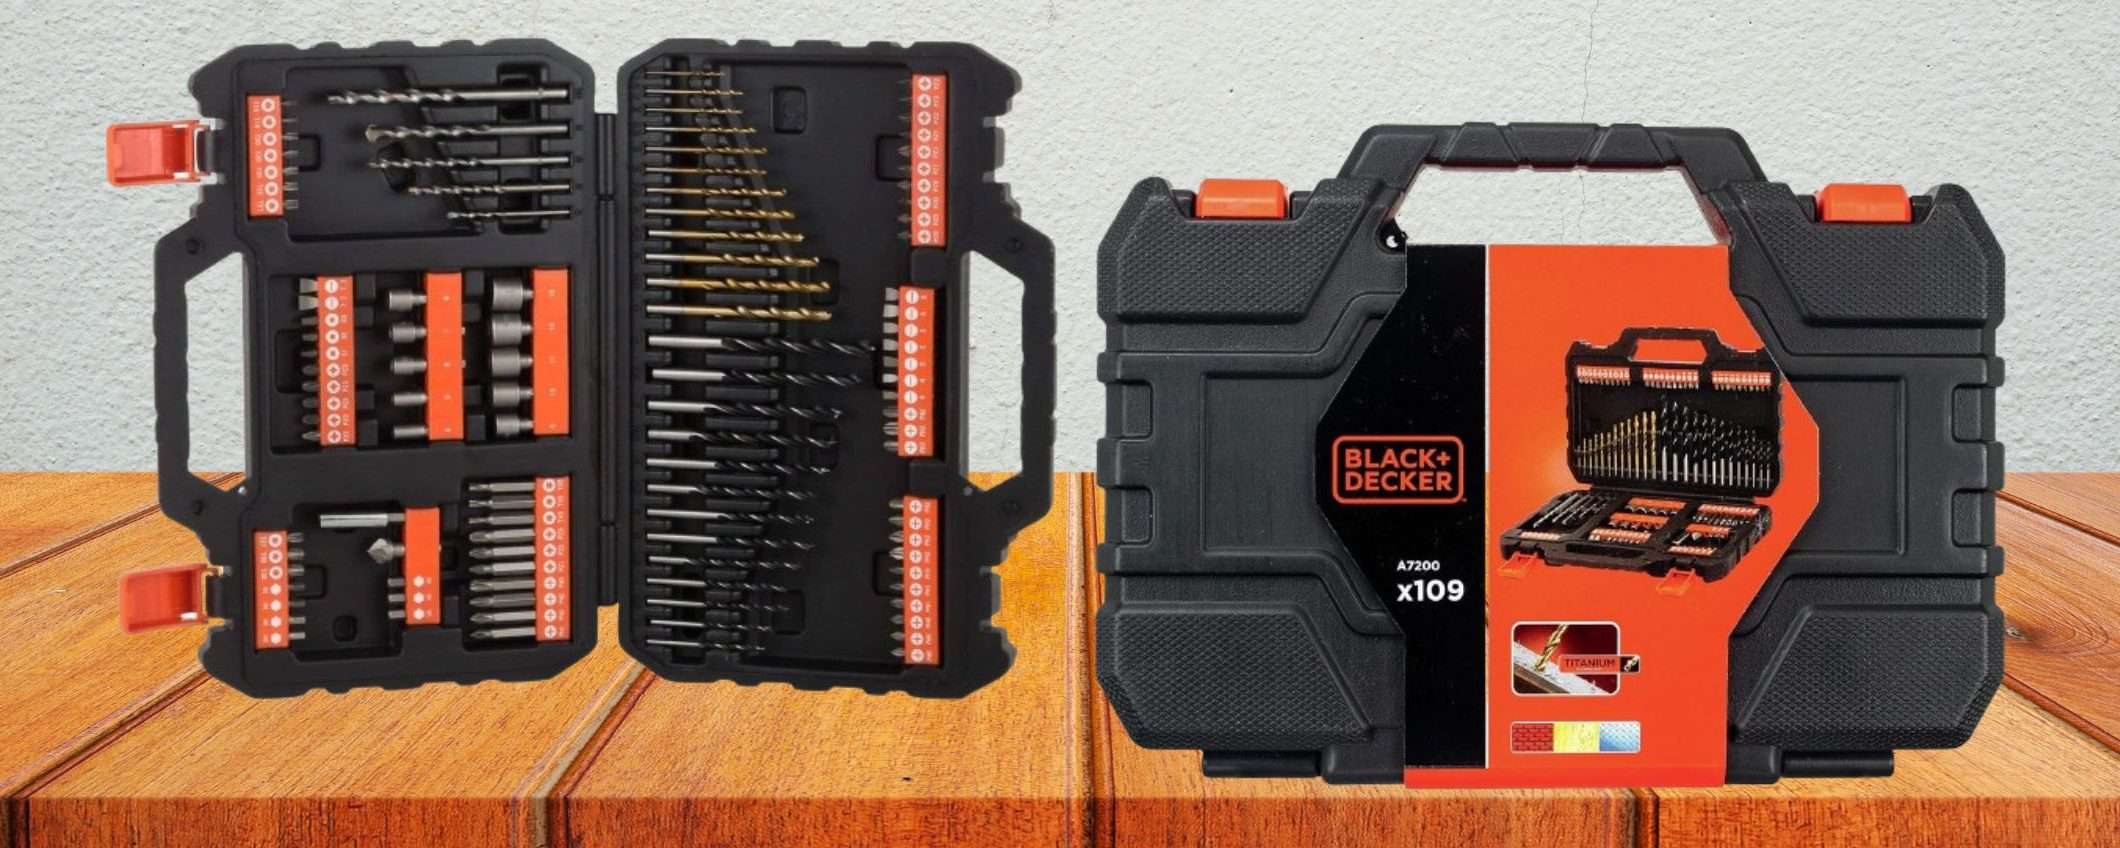 Enorme kit Black+Decker 109 in 1: prezzo STREPITOSO su Amazon (20€)